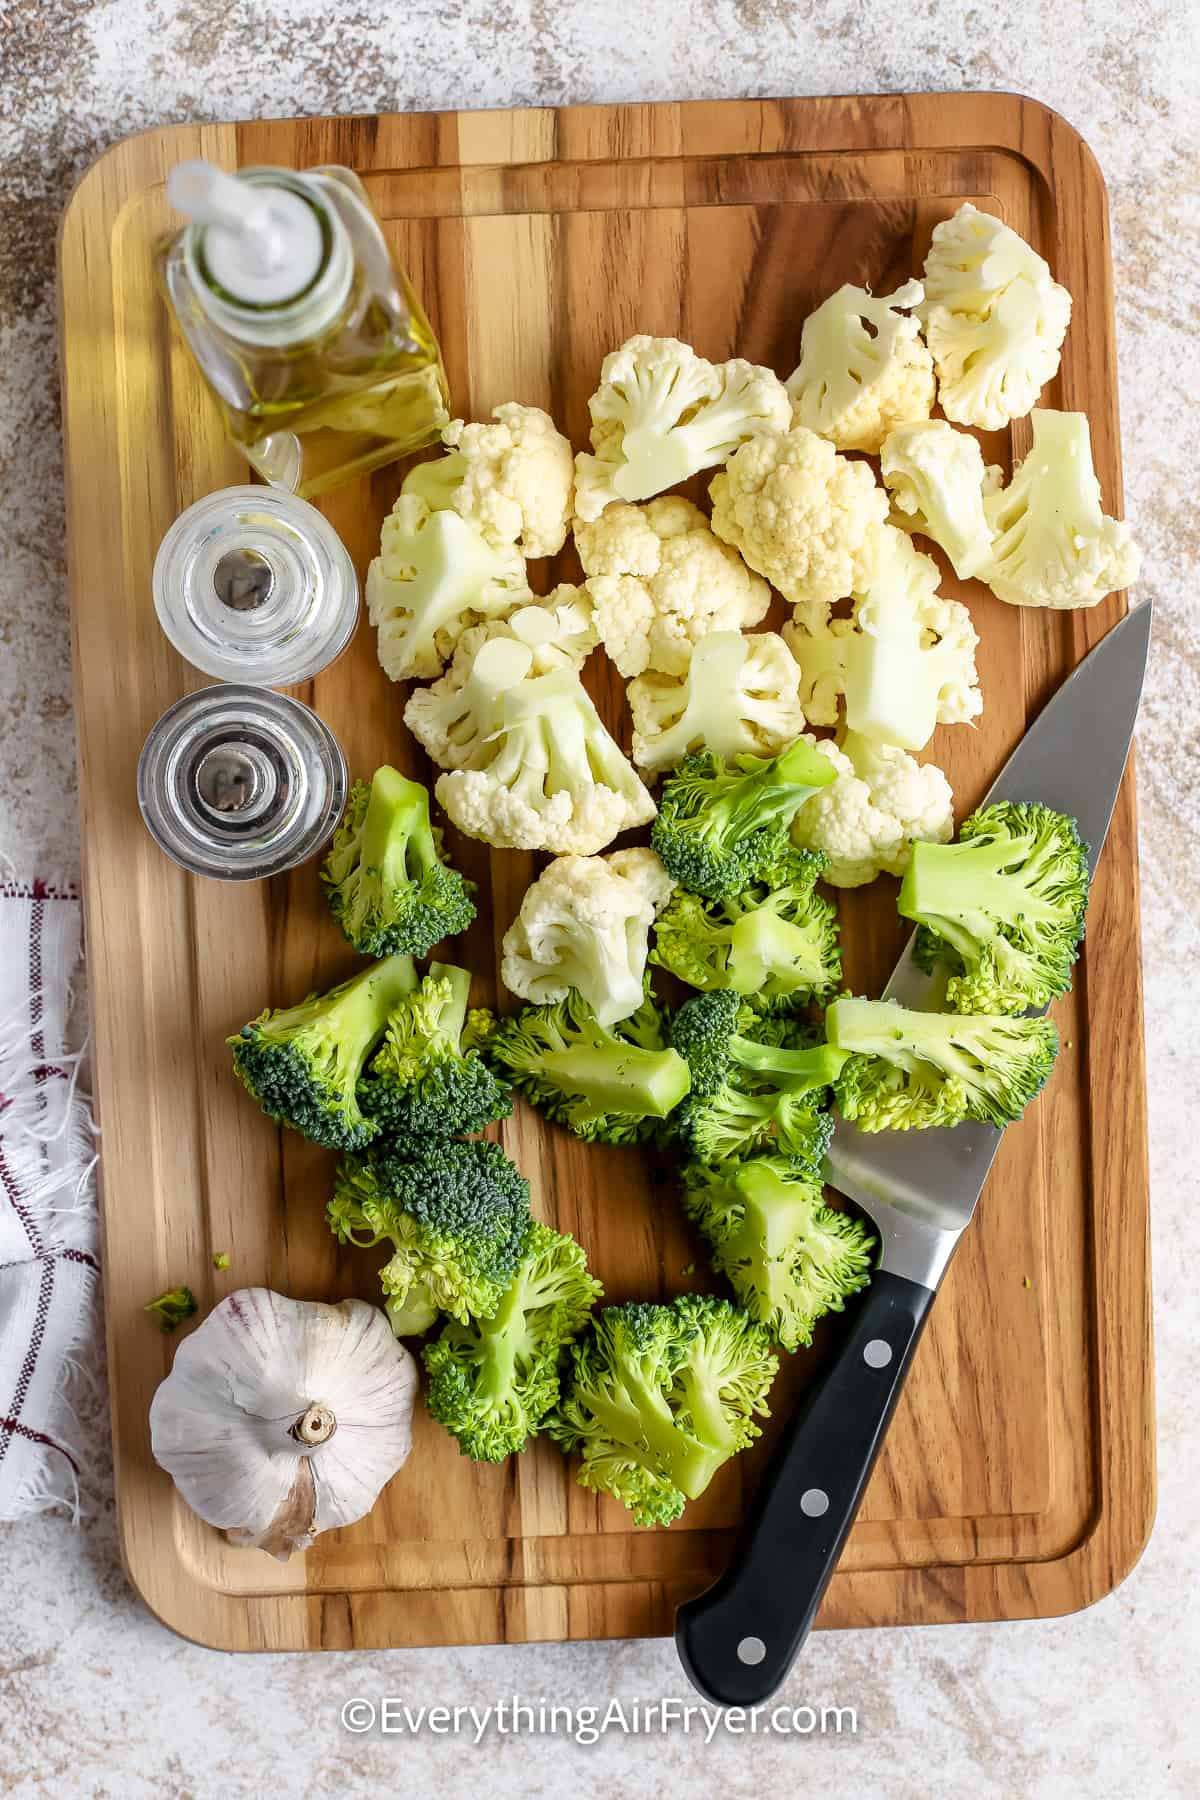 Ingredients to make Air Fryer Broccoli and Cauliflower